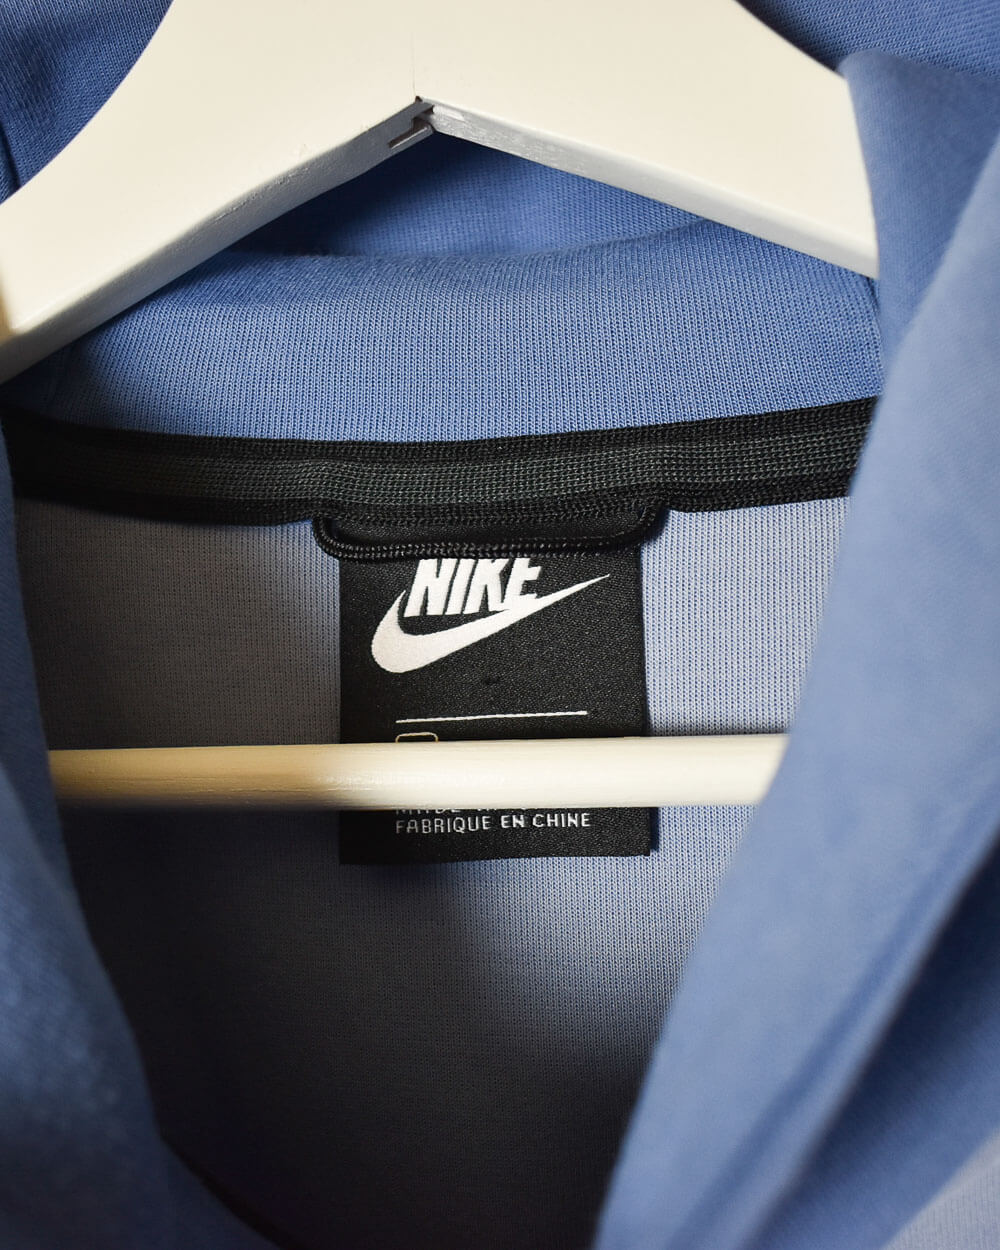 Blue Nike Zip-Through Hoodie - X-Large